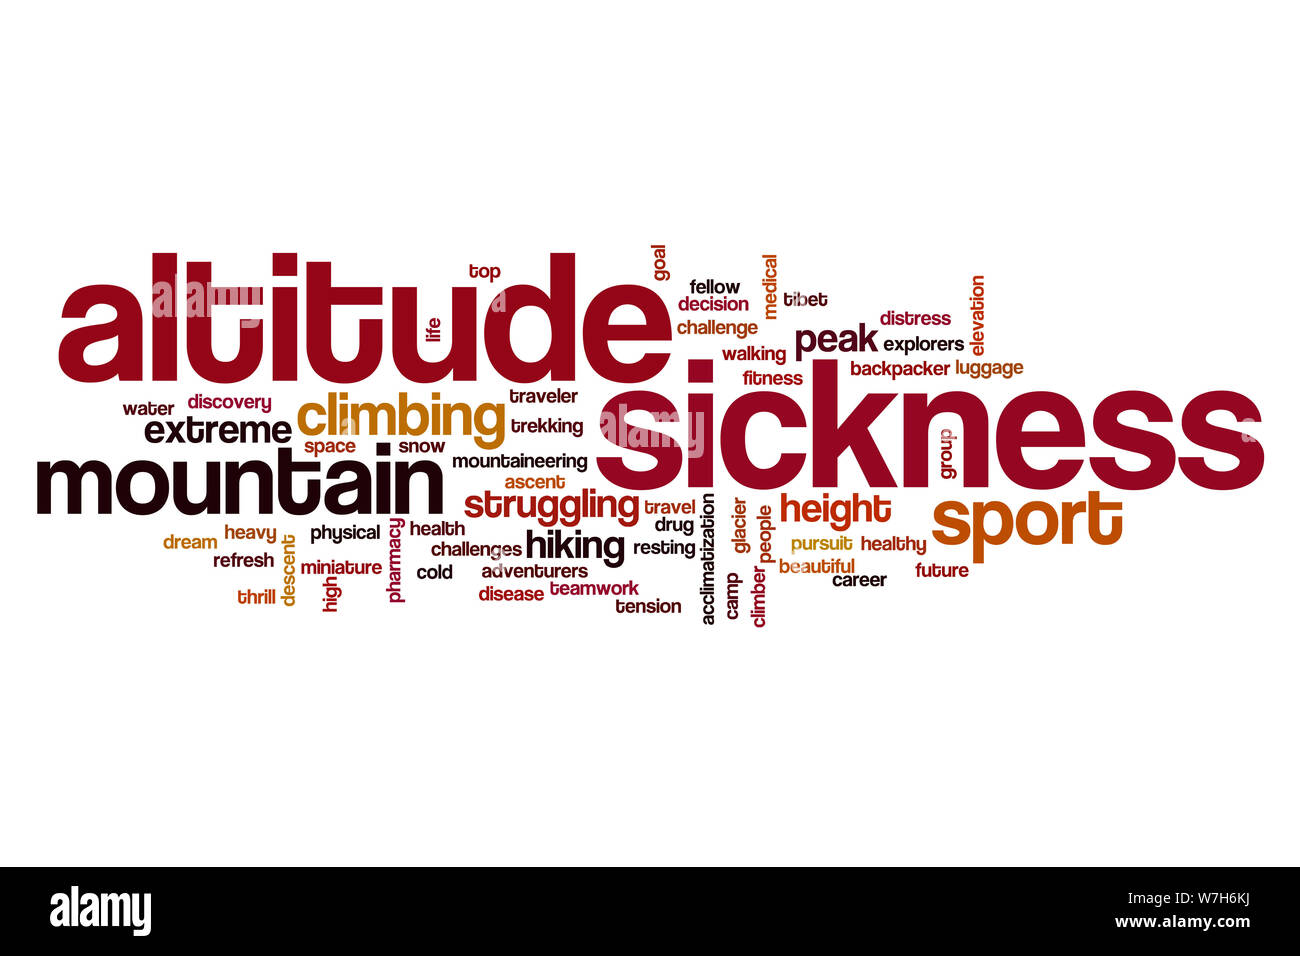 Altitude sickness word cloud concept Stock Photo